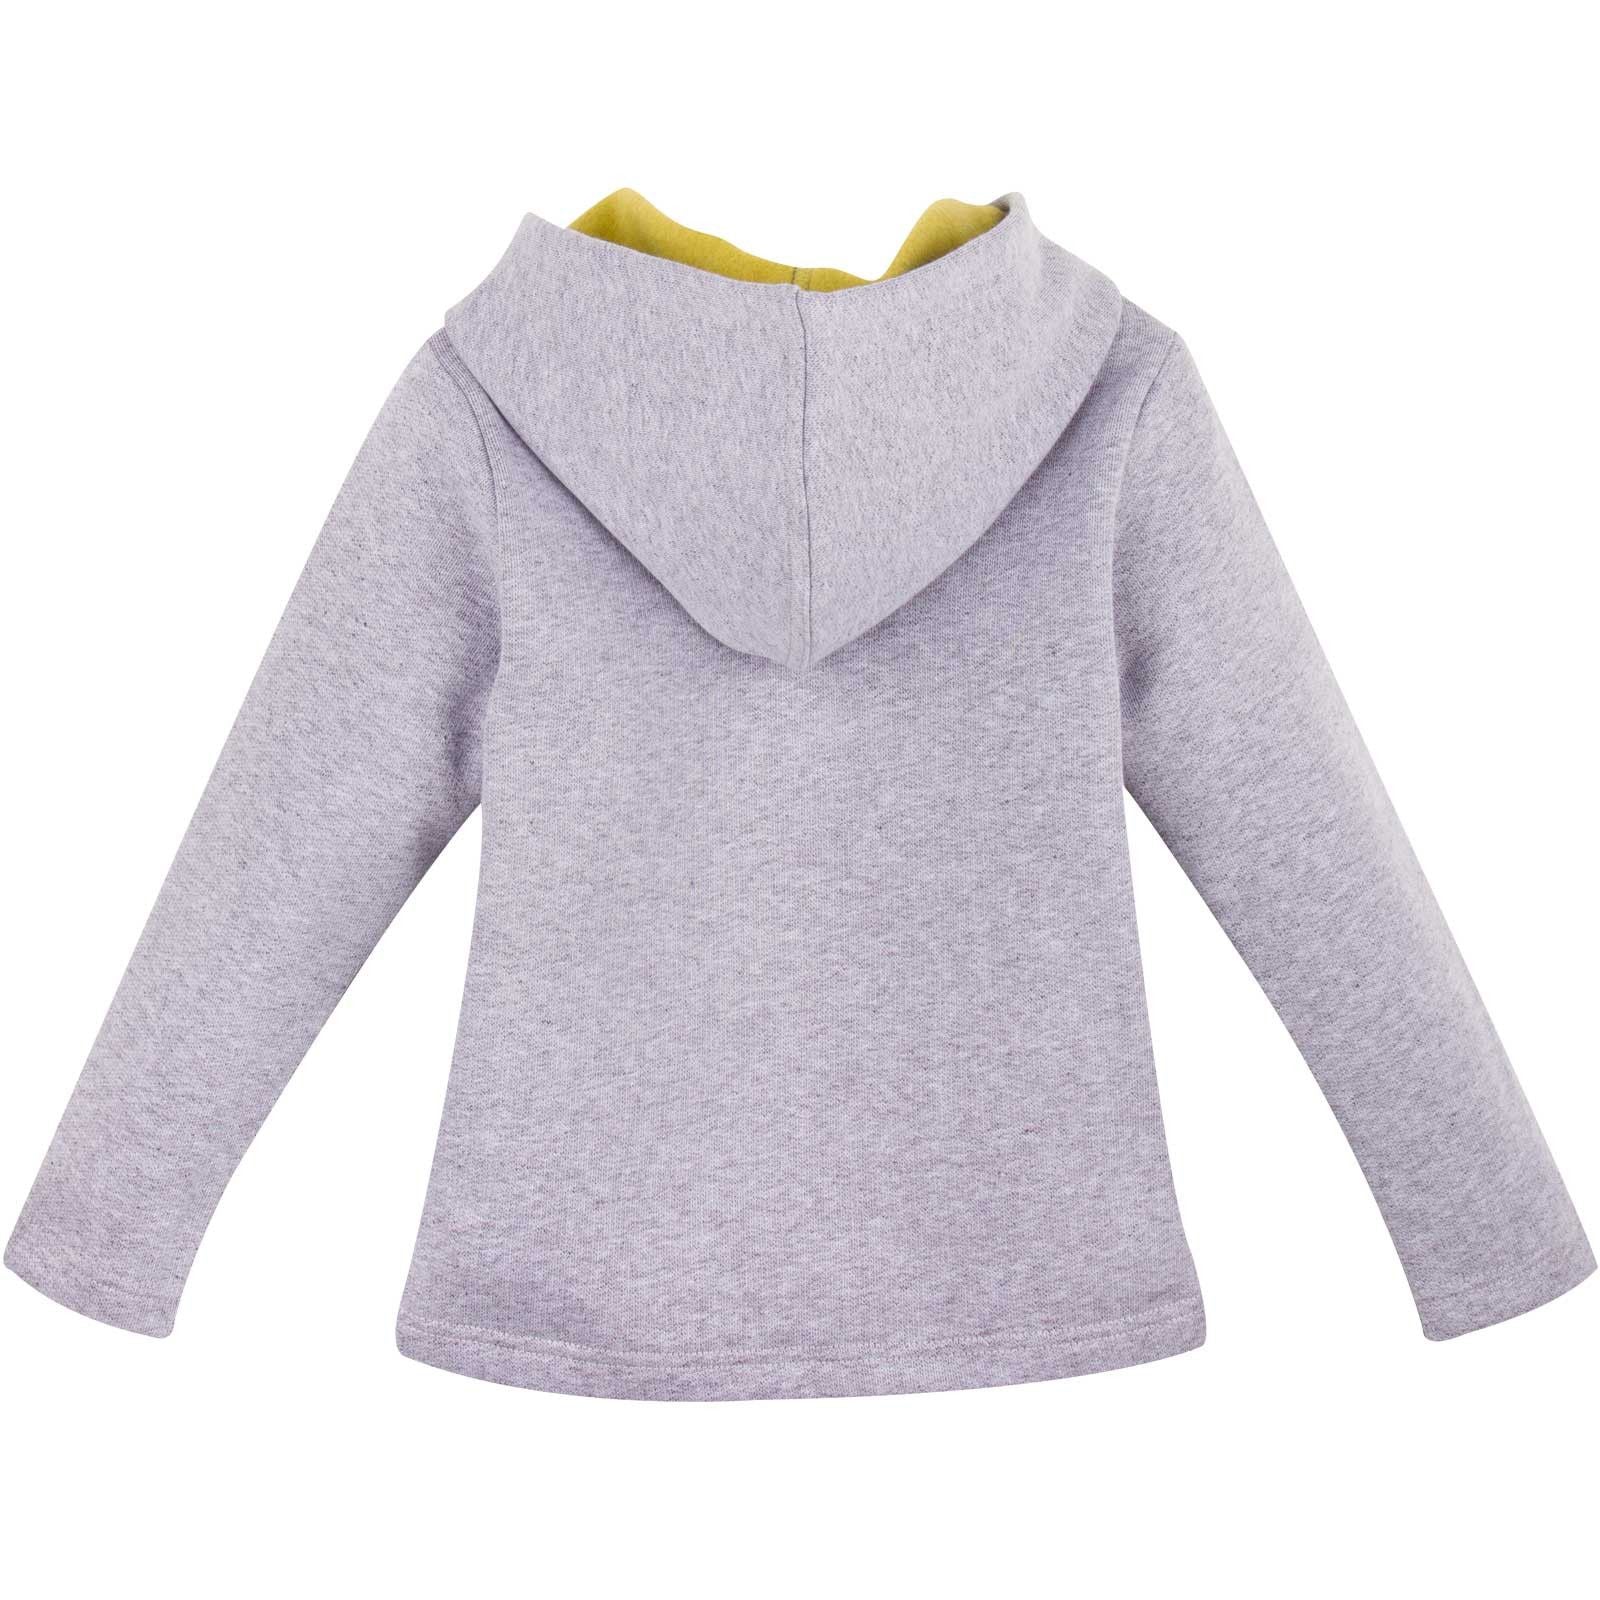 Boys Grey Monster Embroidered Hooded Sweatshirt - CÉMAROSE | Children's Fashion Store - 2